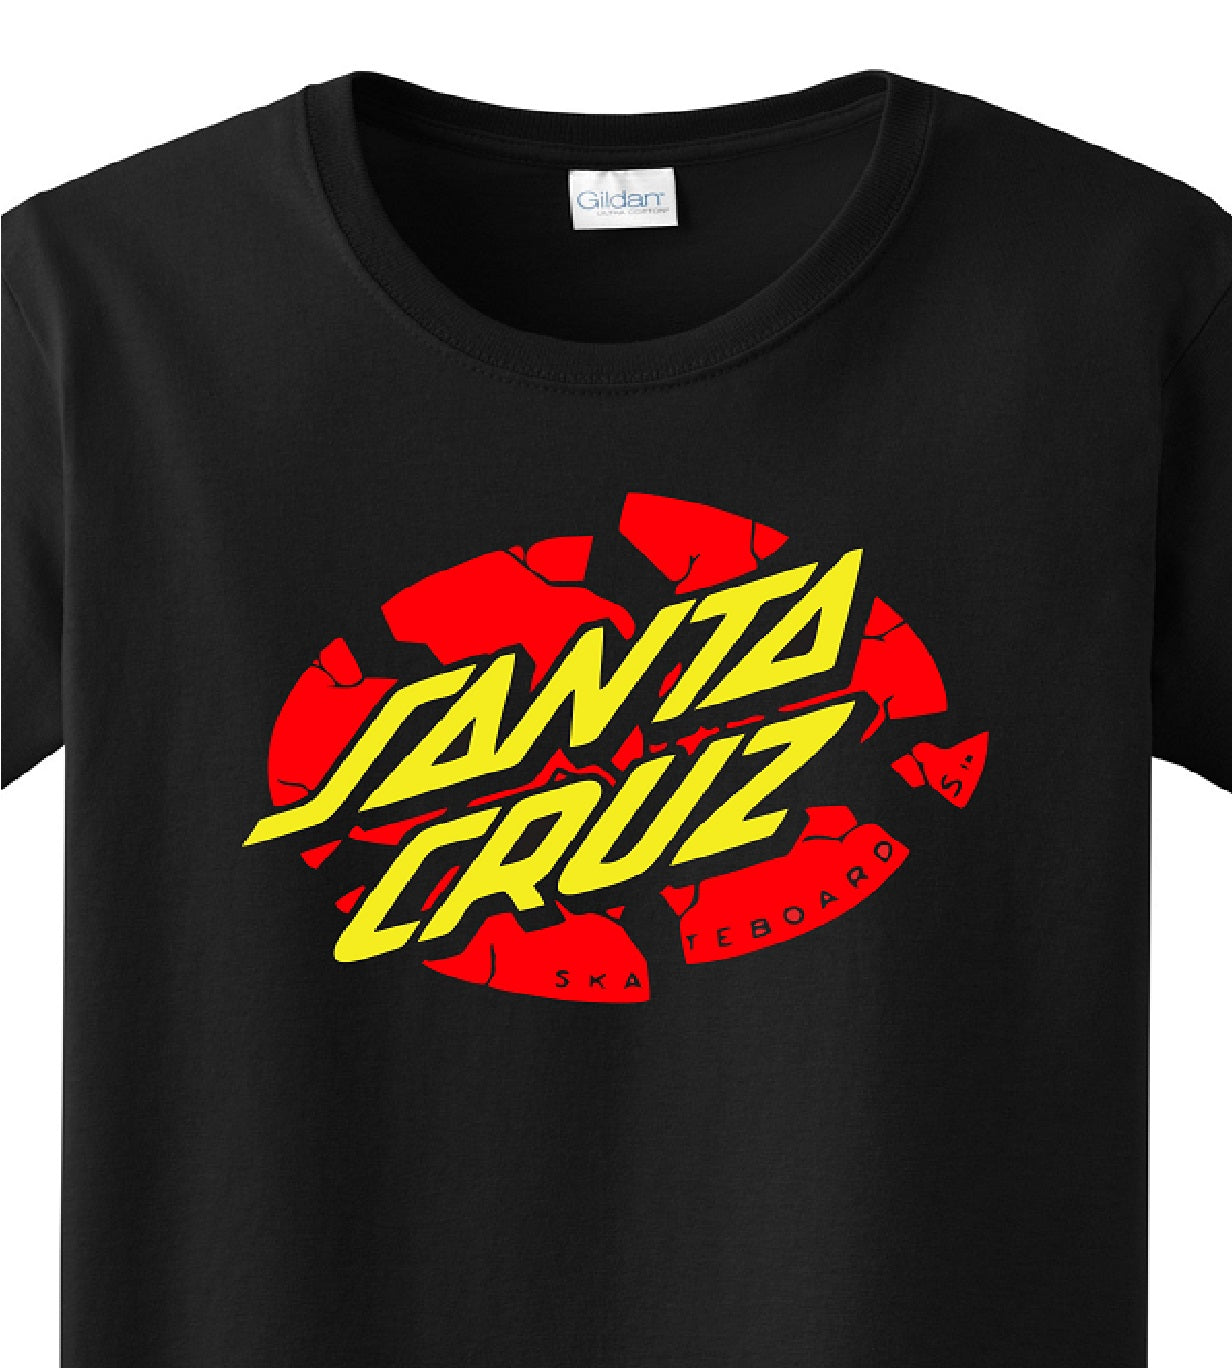 Skate Men's Shirt - Santa Cruz (Black) - MYSTYLEMYCLOTHING